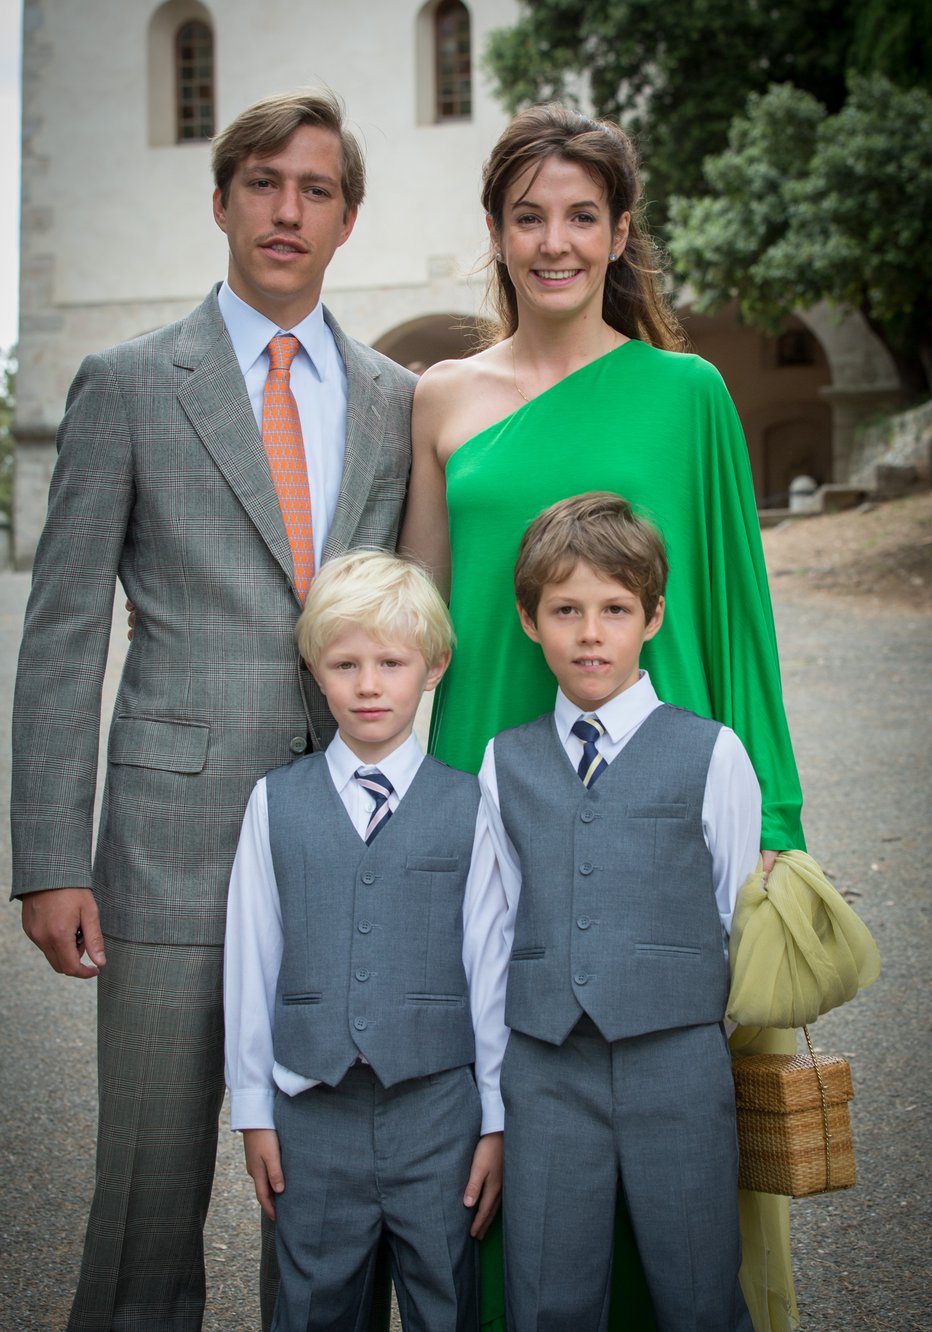 Fotografija: Tessy in princ Louis imata dva otroka. FOTO: Guliver/getty Images